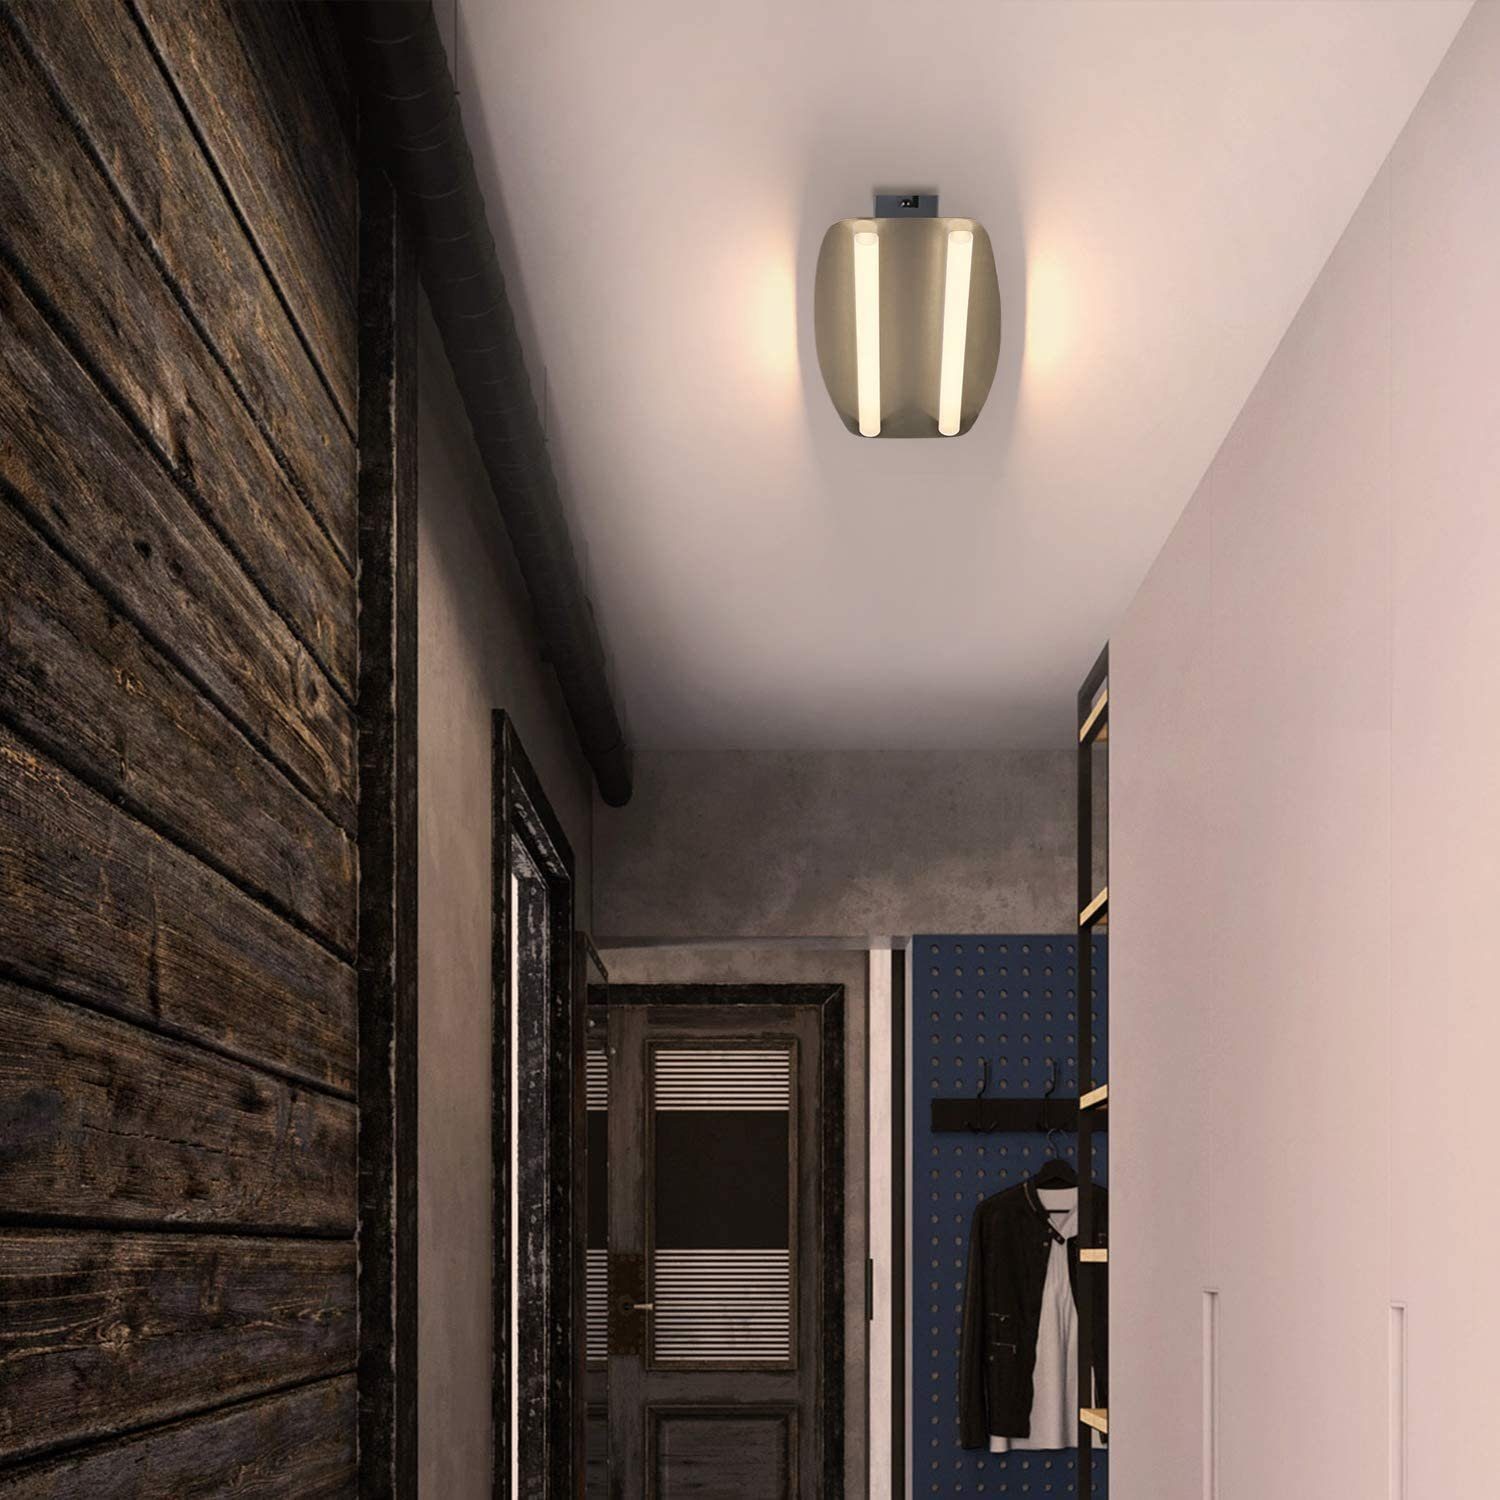 ZMH LED Deckenleuchte Wandleuchte Acryl integriert, Küche Warmweiß Kronleuchter, Nickel fest Innen LED